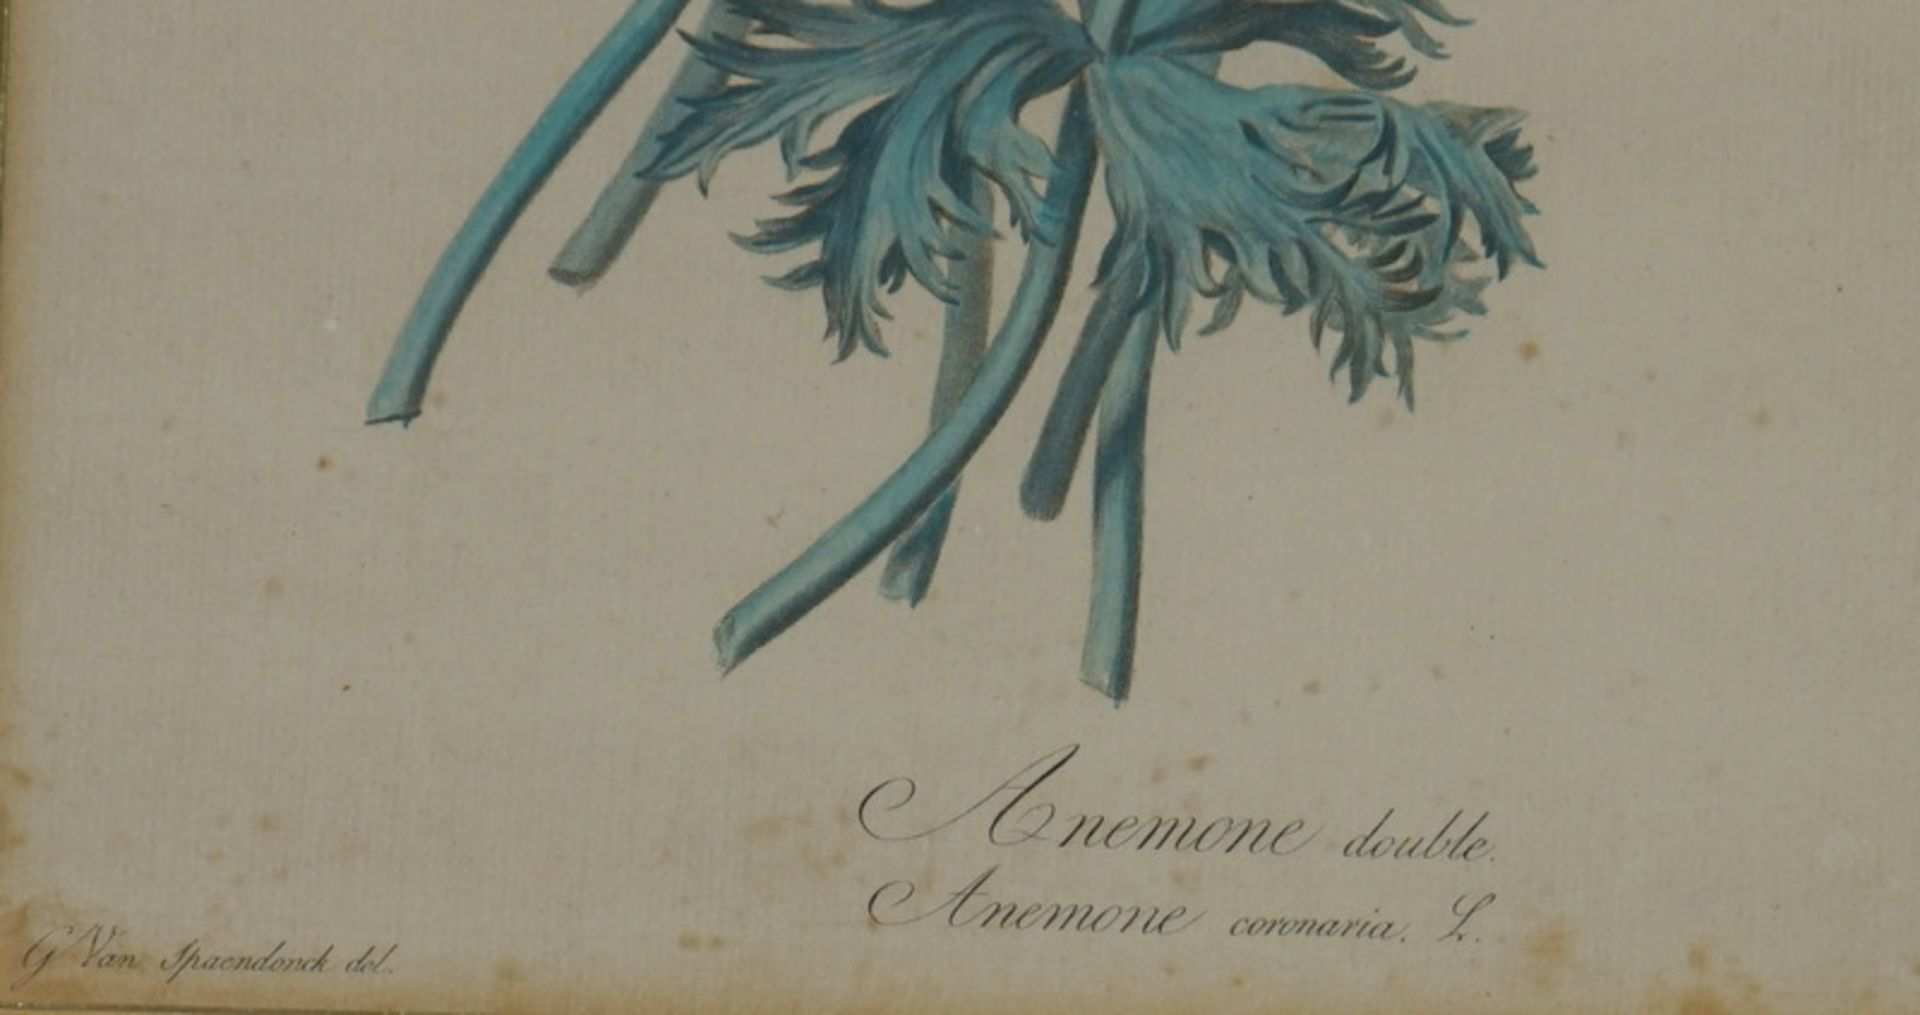 Sammlung antike Graphiken aus der Botanik "Anemone" etc. - Image 3 of 5